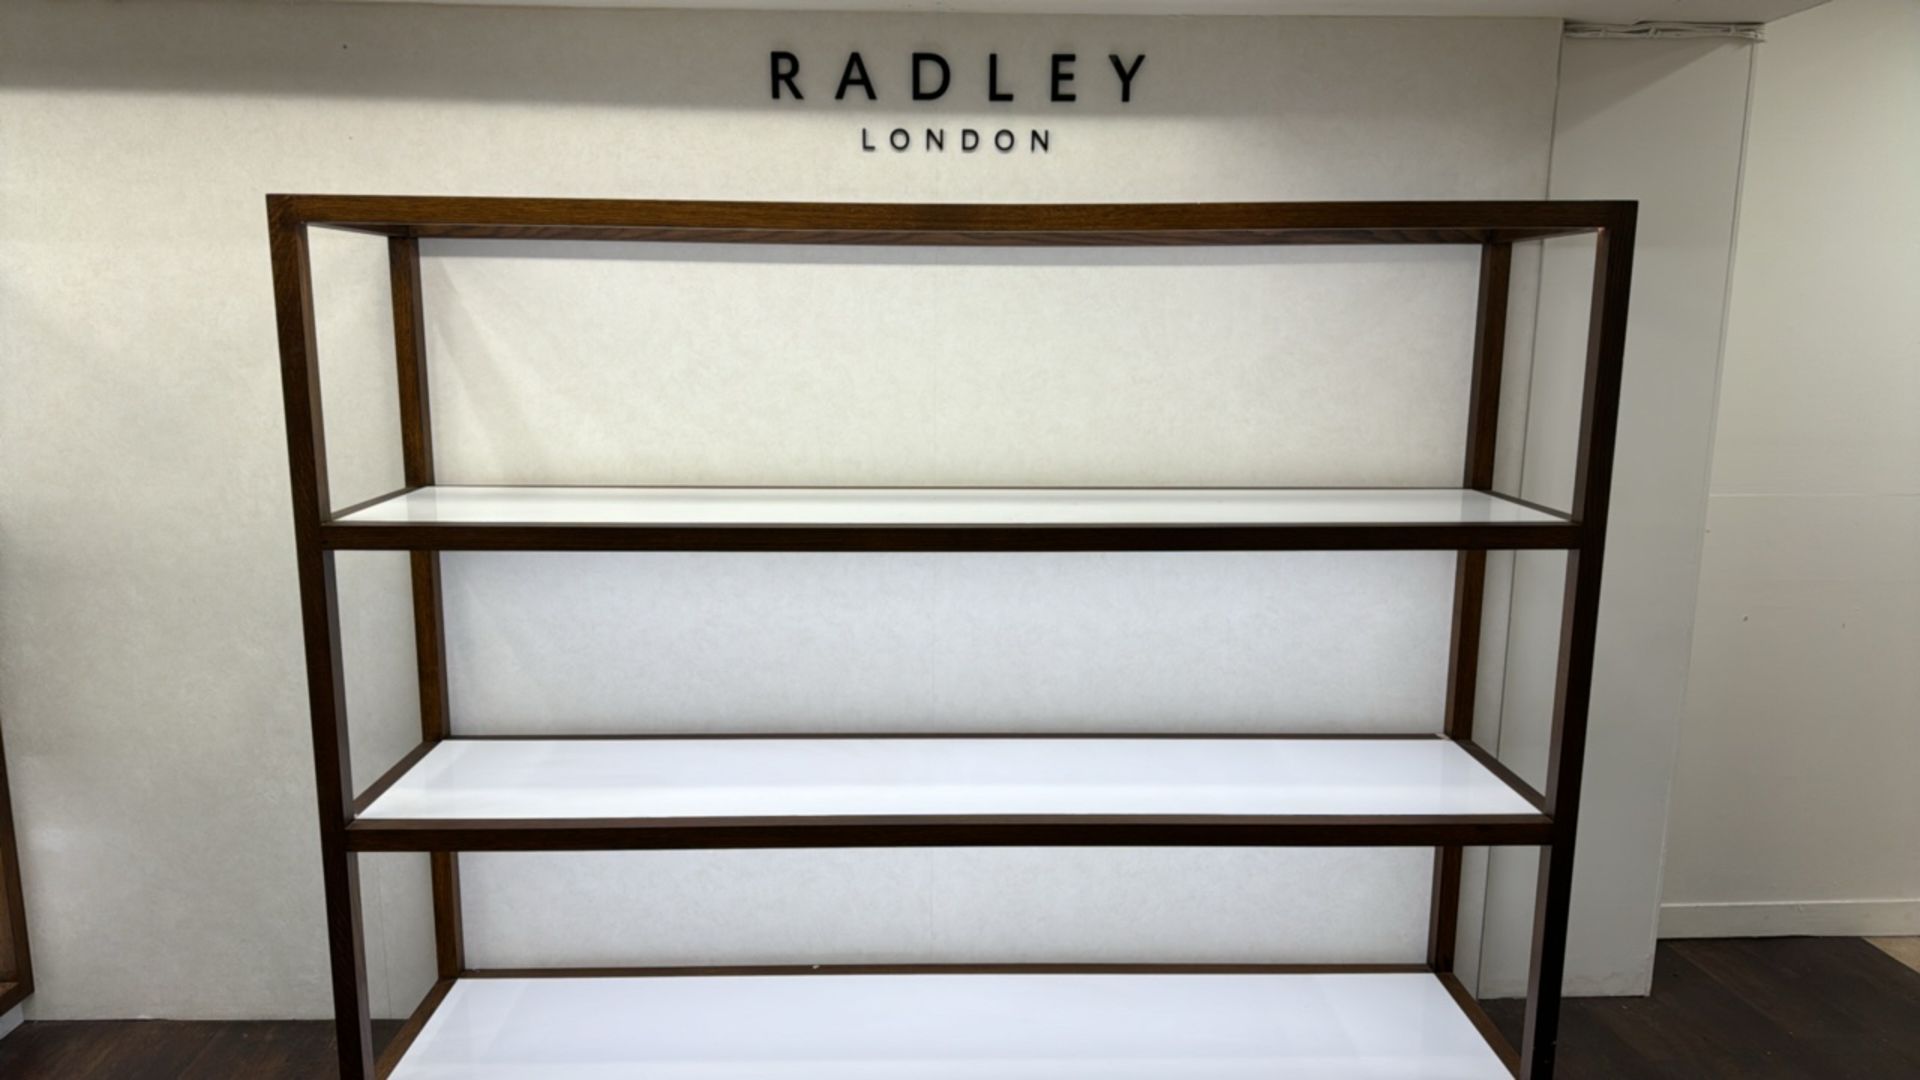 Radley Wall Display Units - Image 8 of 8